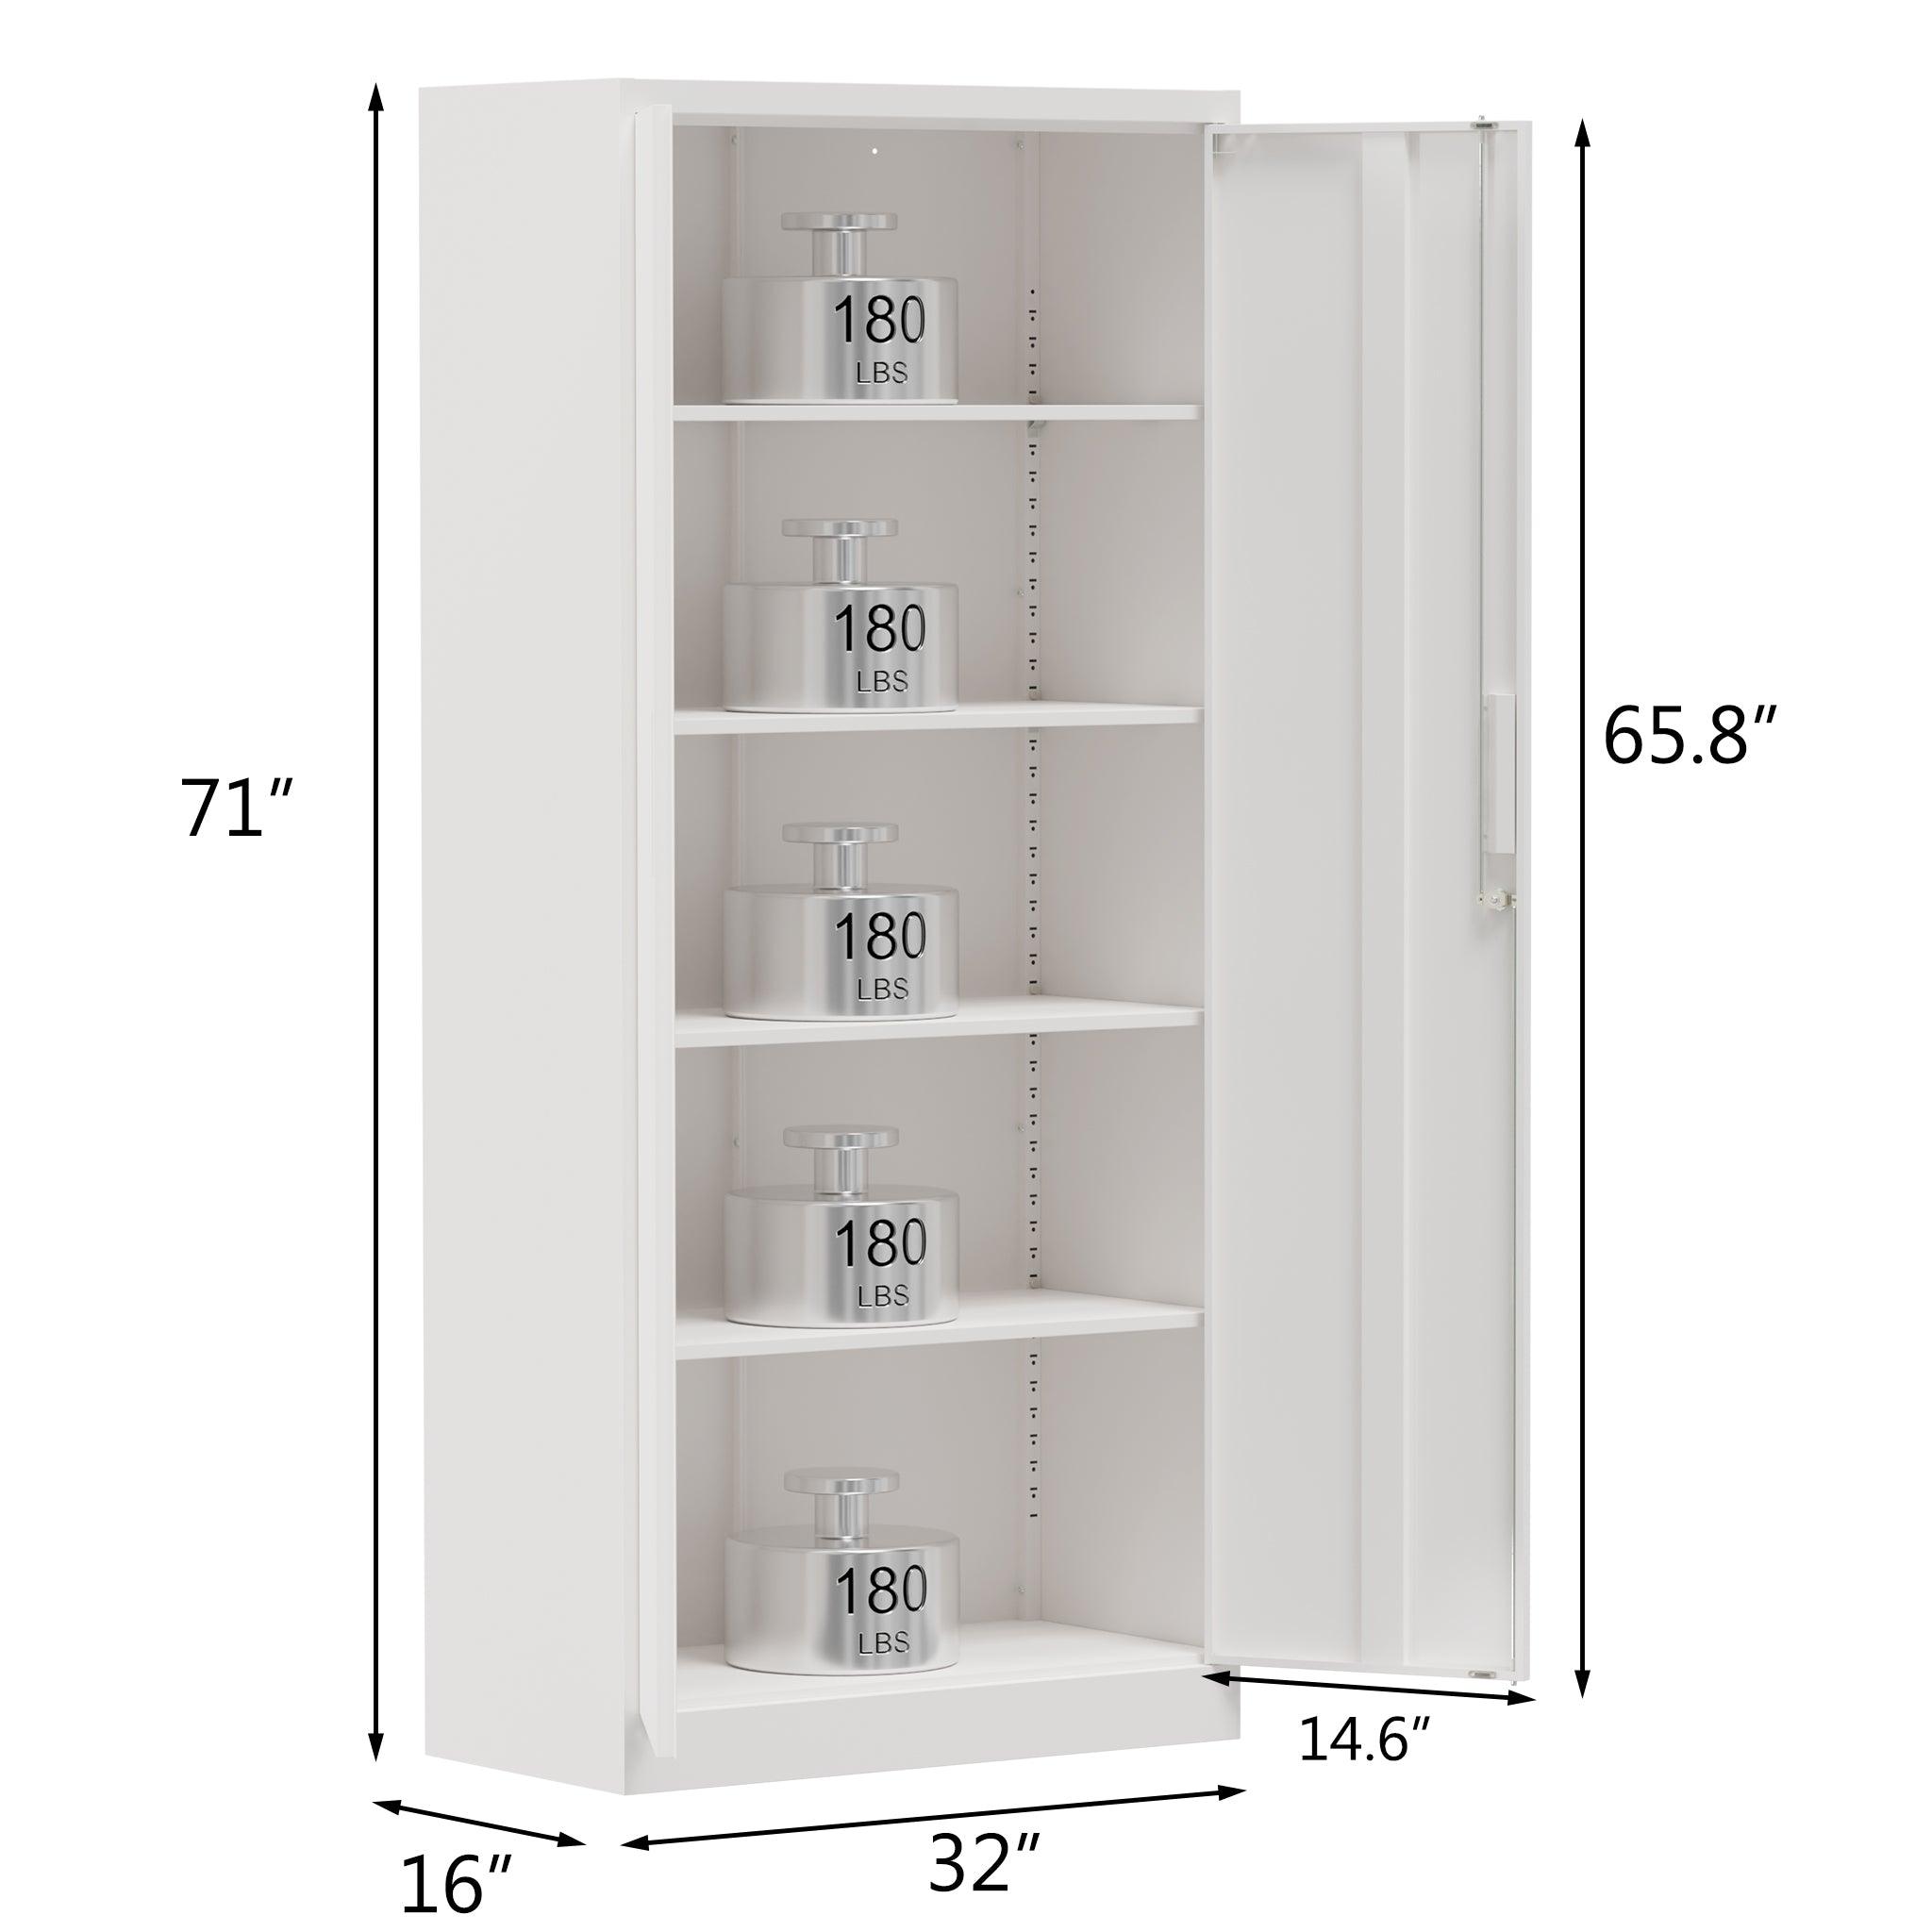 RaDEWAY Large Metal Storage Cabinet with Locking Doors and Adjustable Shelf